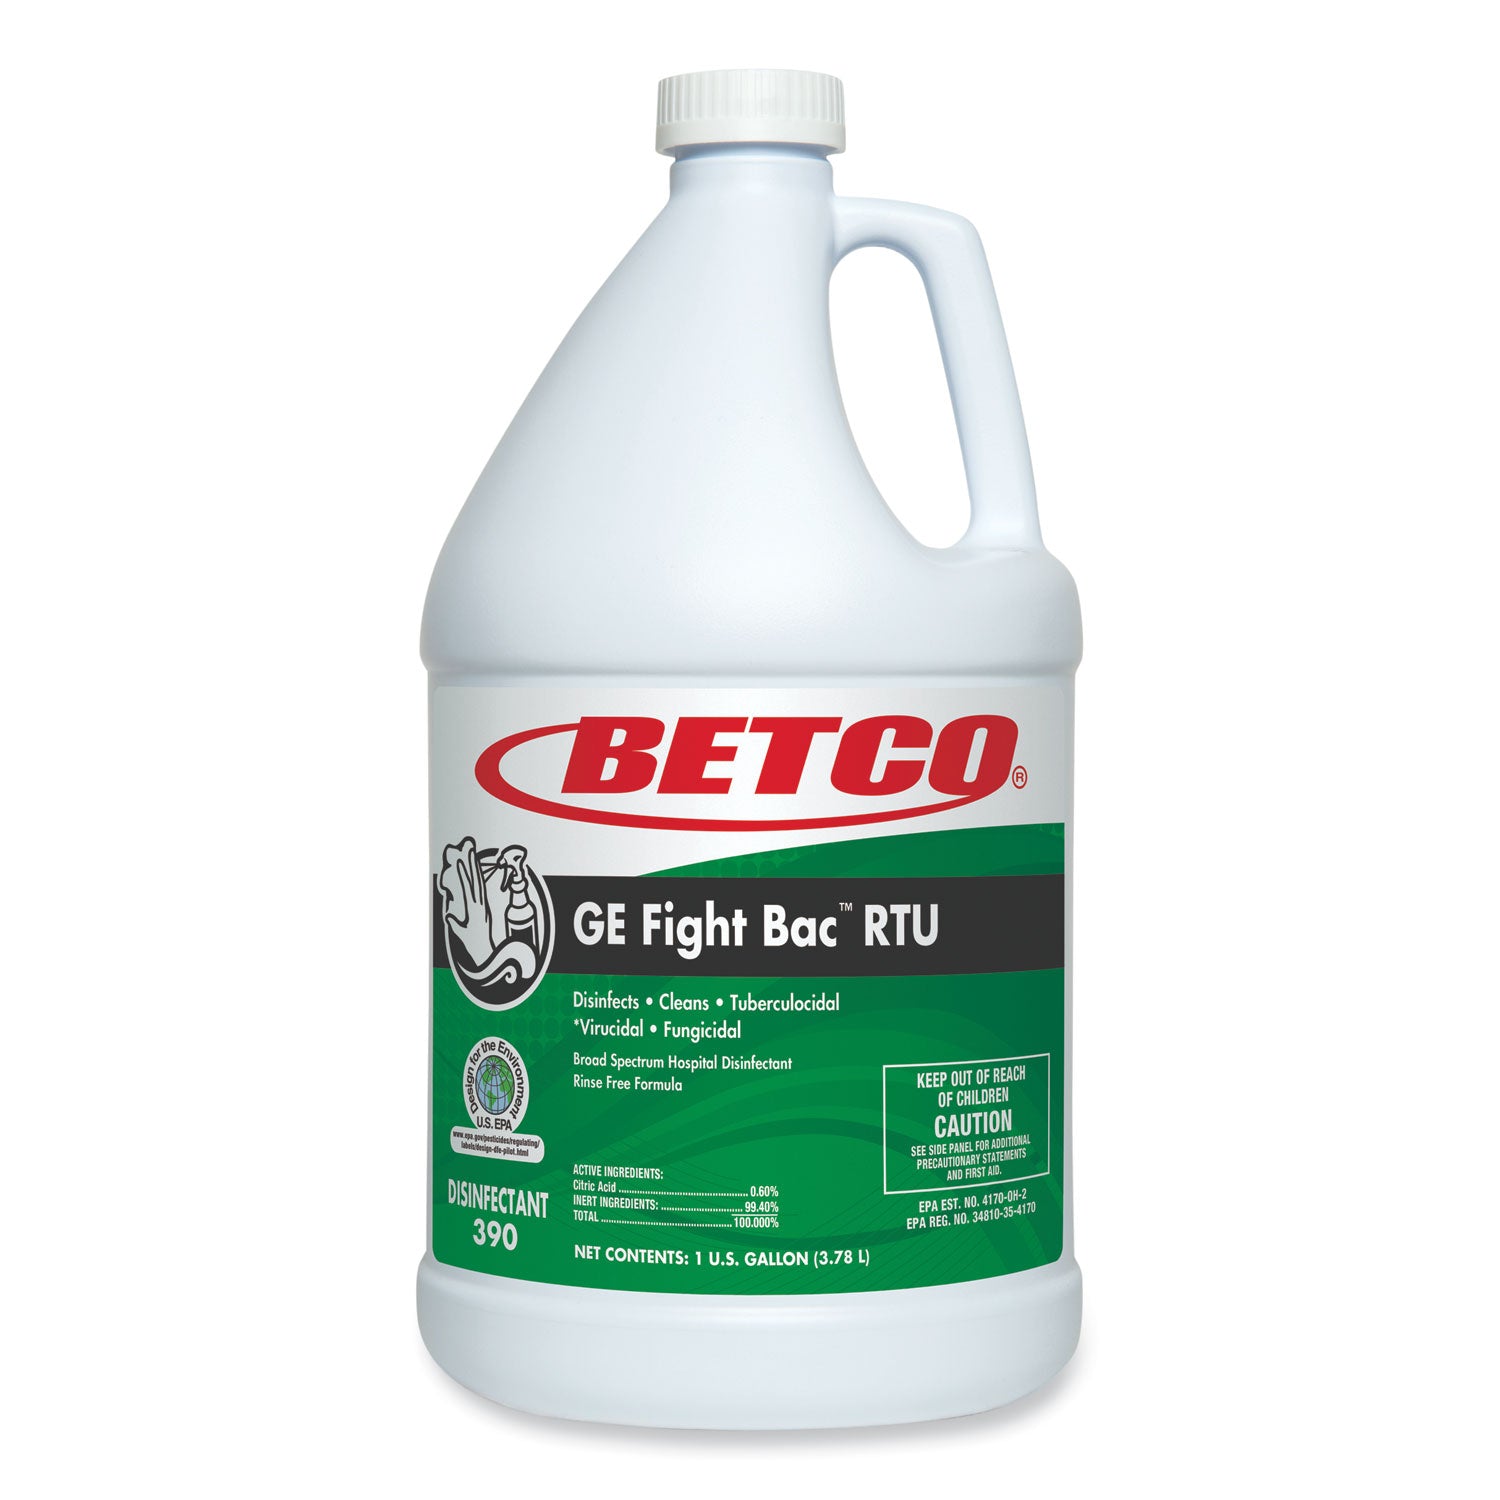 ge-fight-bac-rtu-disinfectant-fresh-scent-1-gal-bottle_bet3900400ea - 1